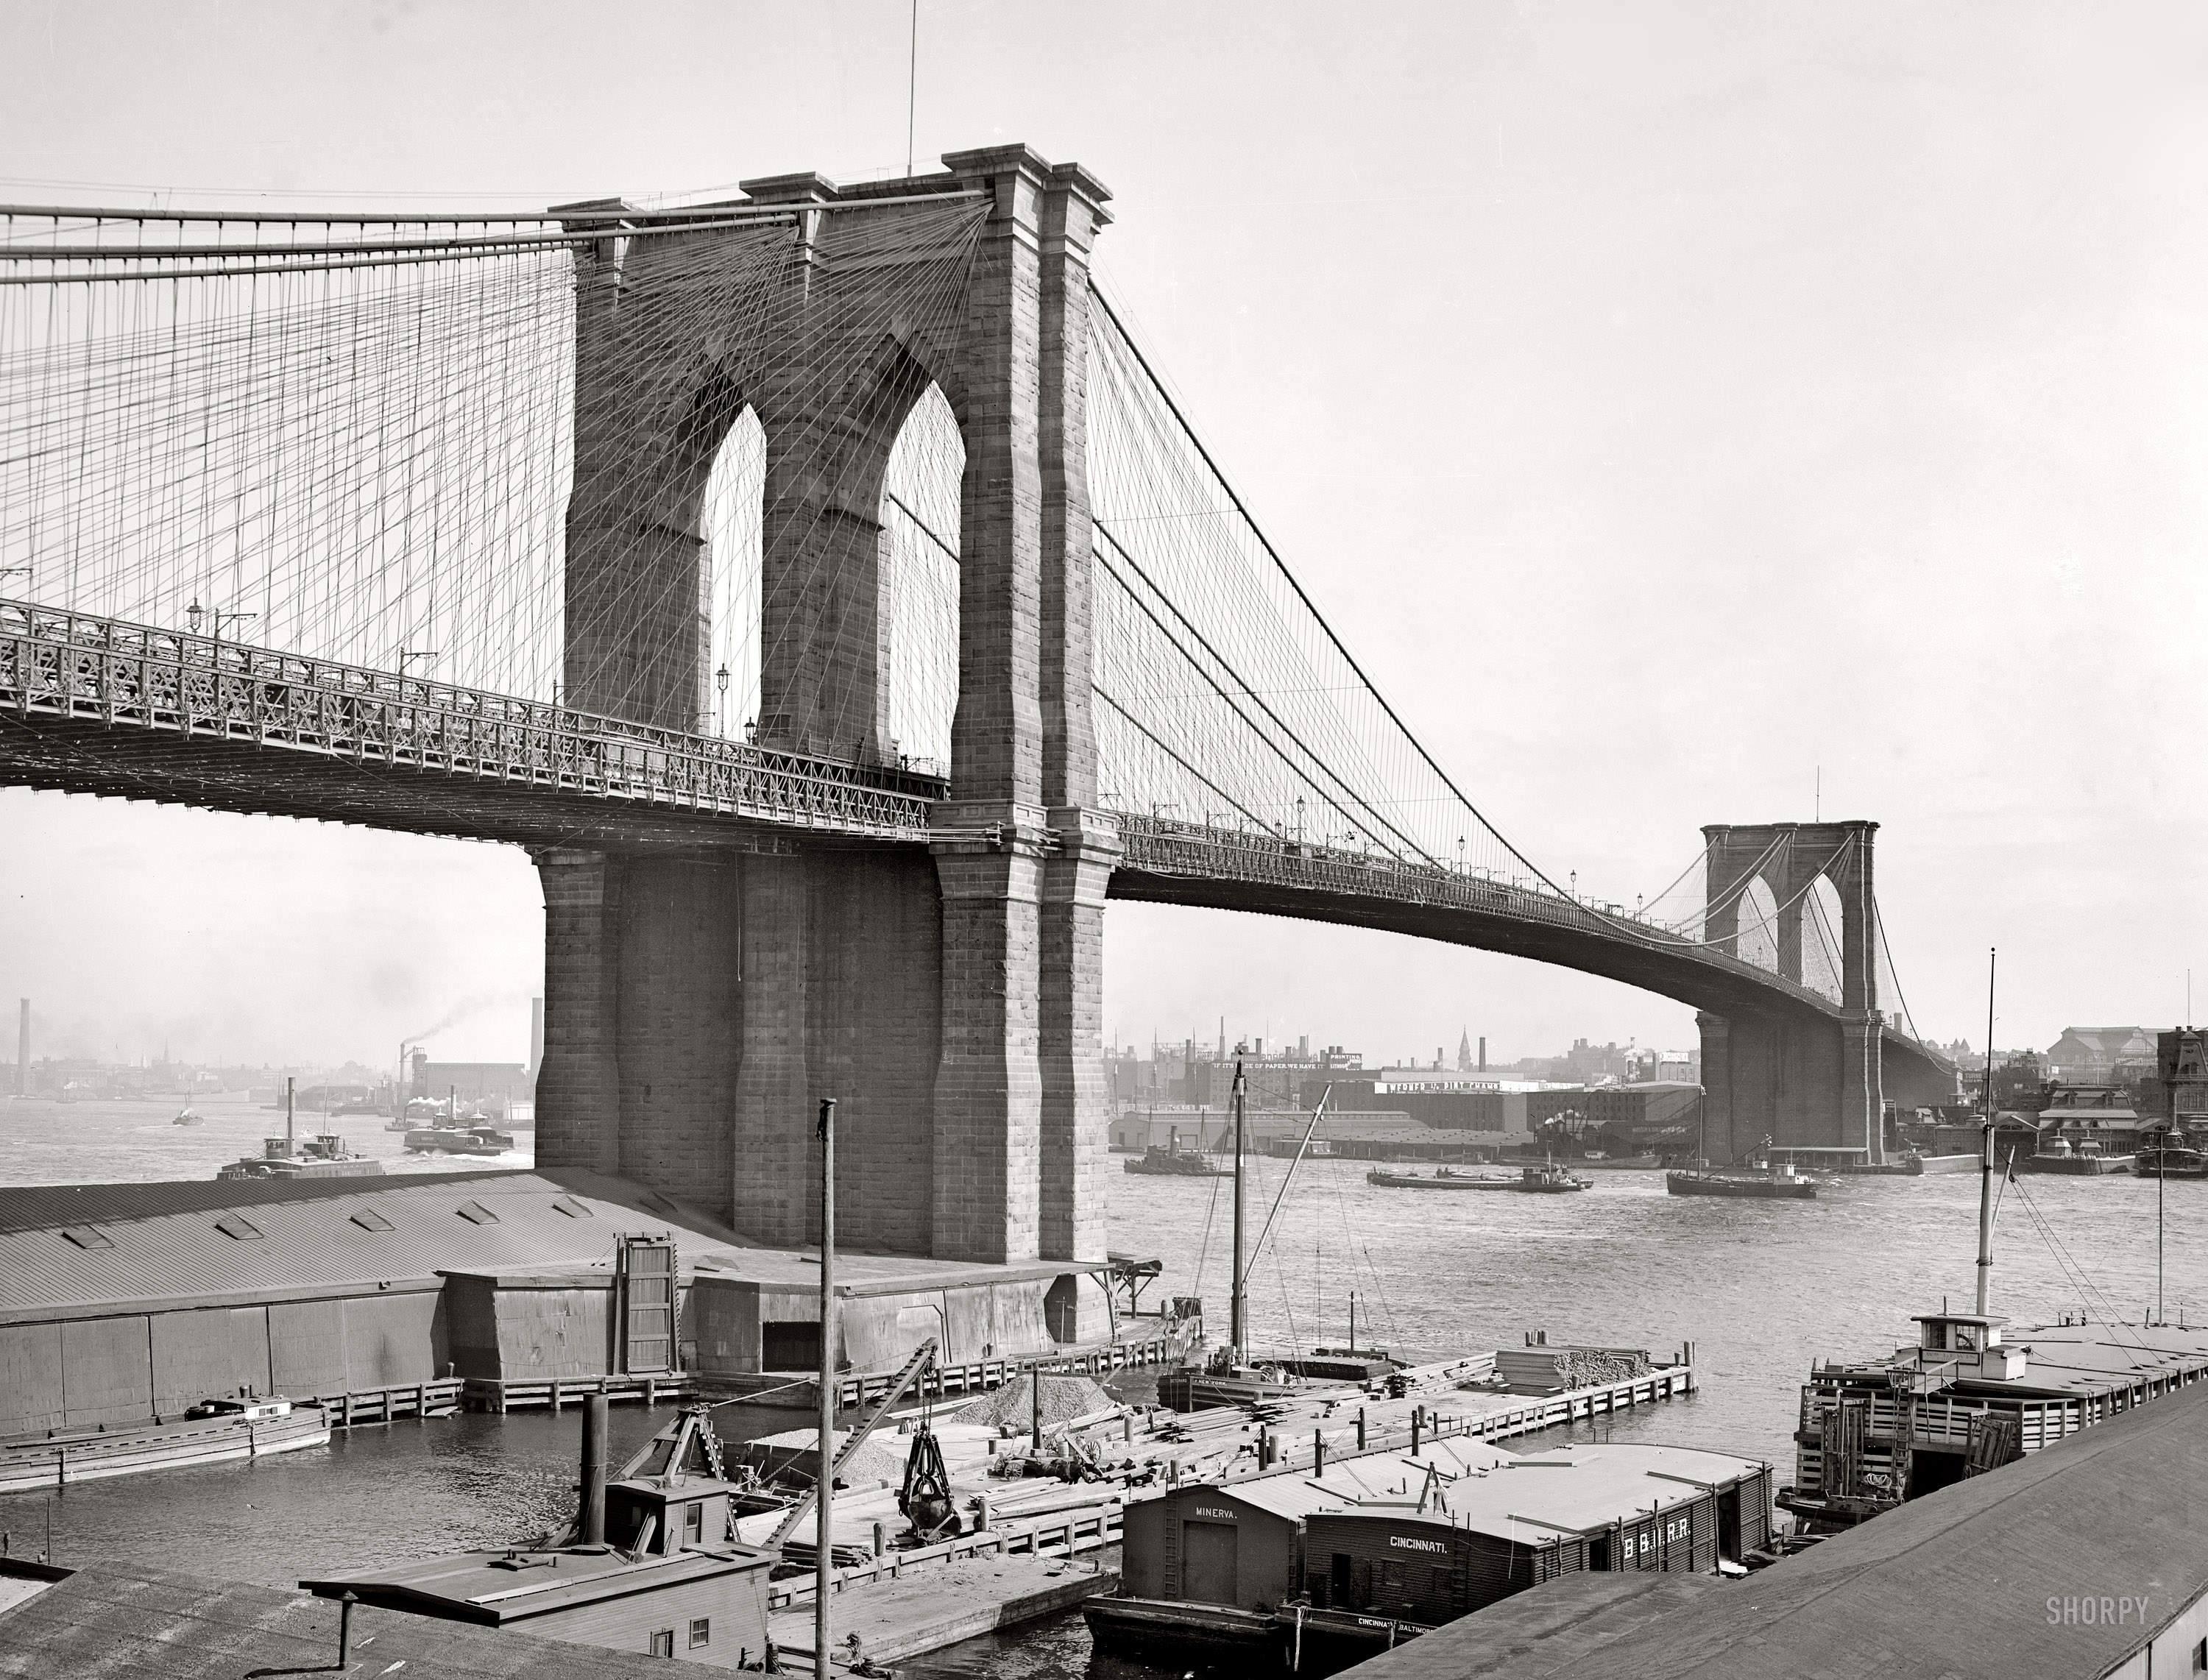 New York circa 1900. "Brooklyn Bridge, East River." 8x10 inch dry plate glass negative, Detroit Publishing Company. View full size.